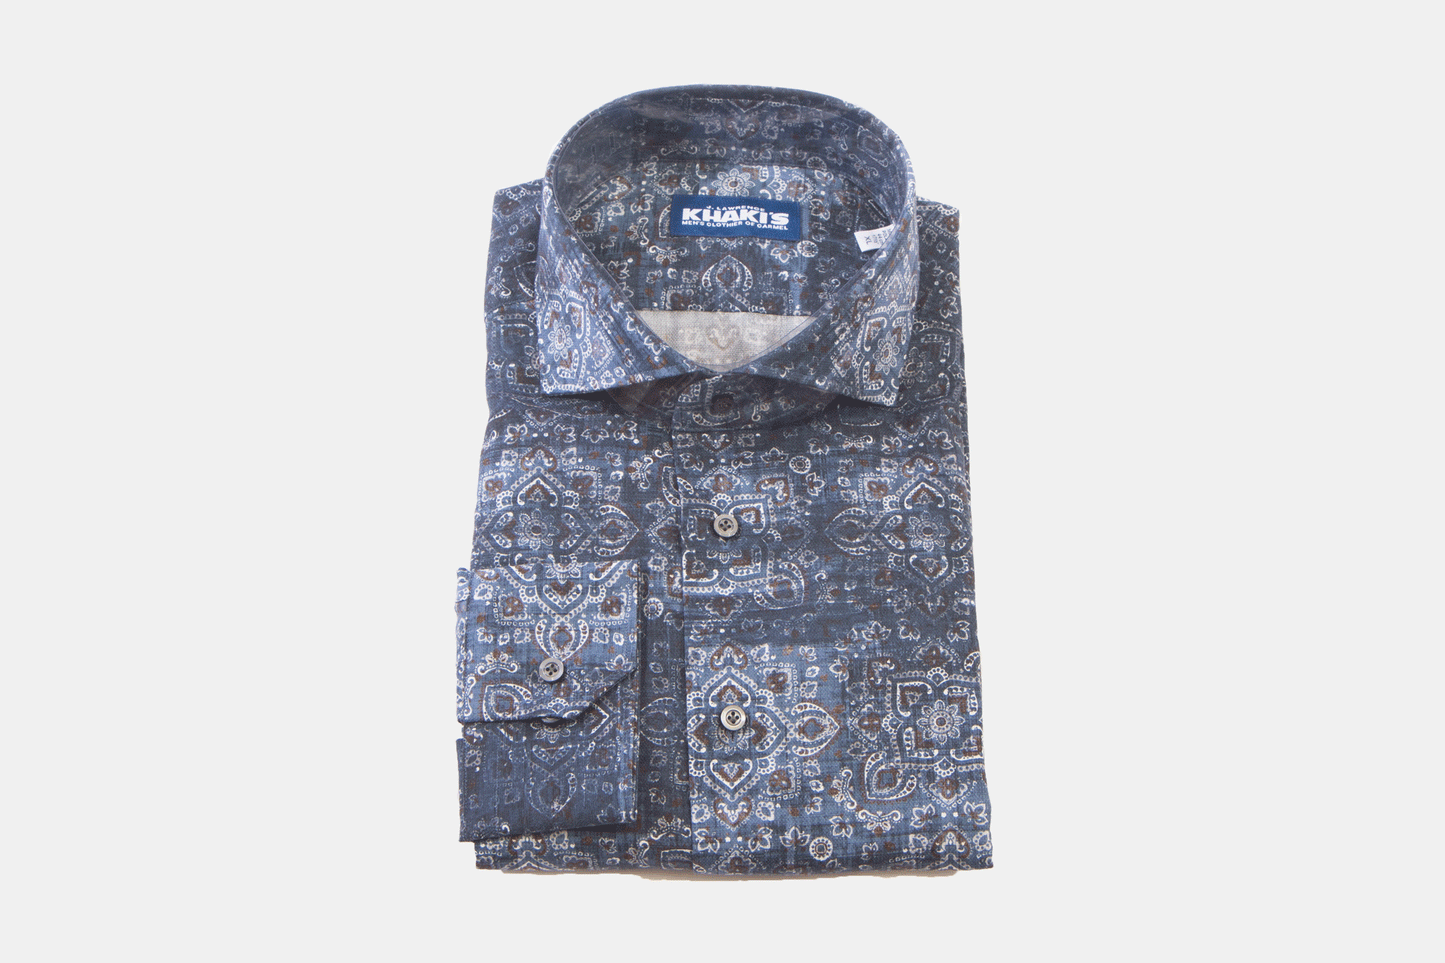 khakis of Carmel - blue damask pattern shirt